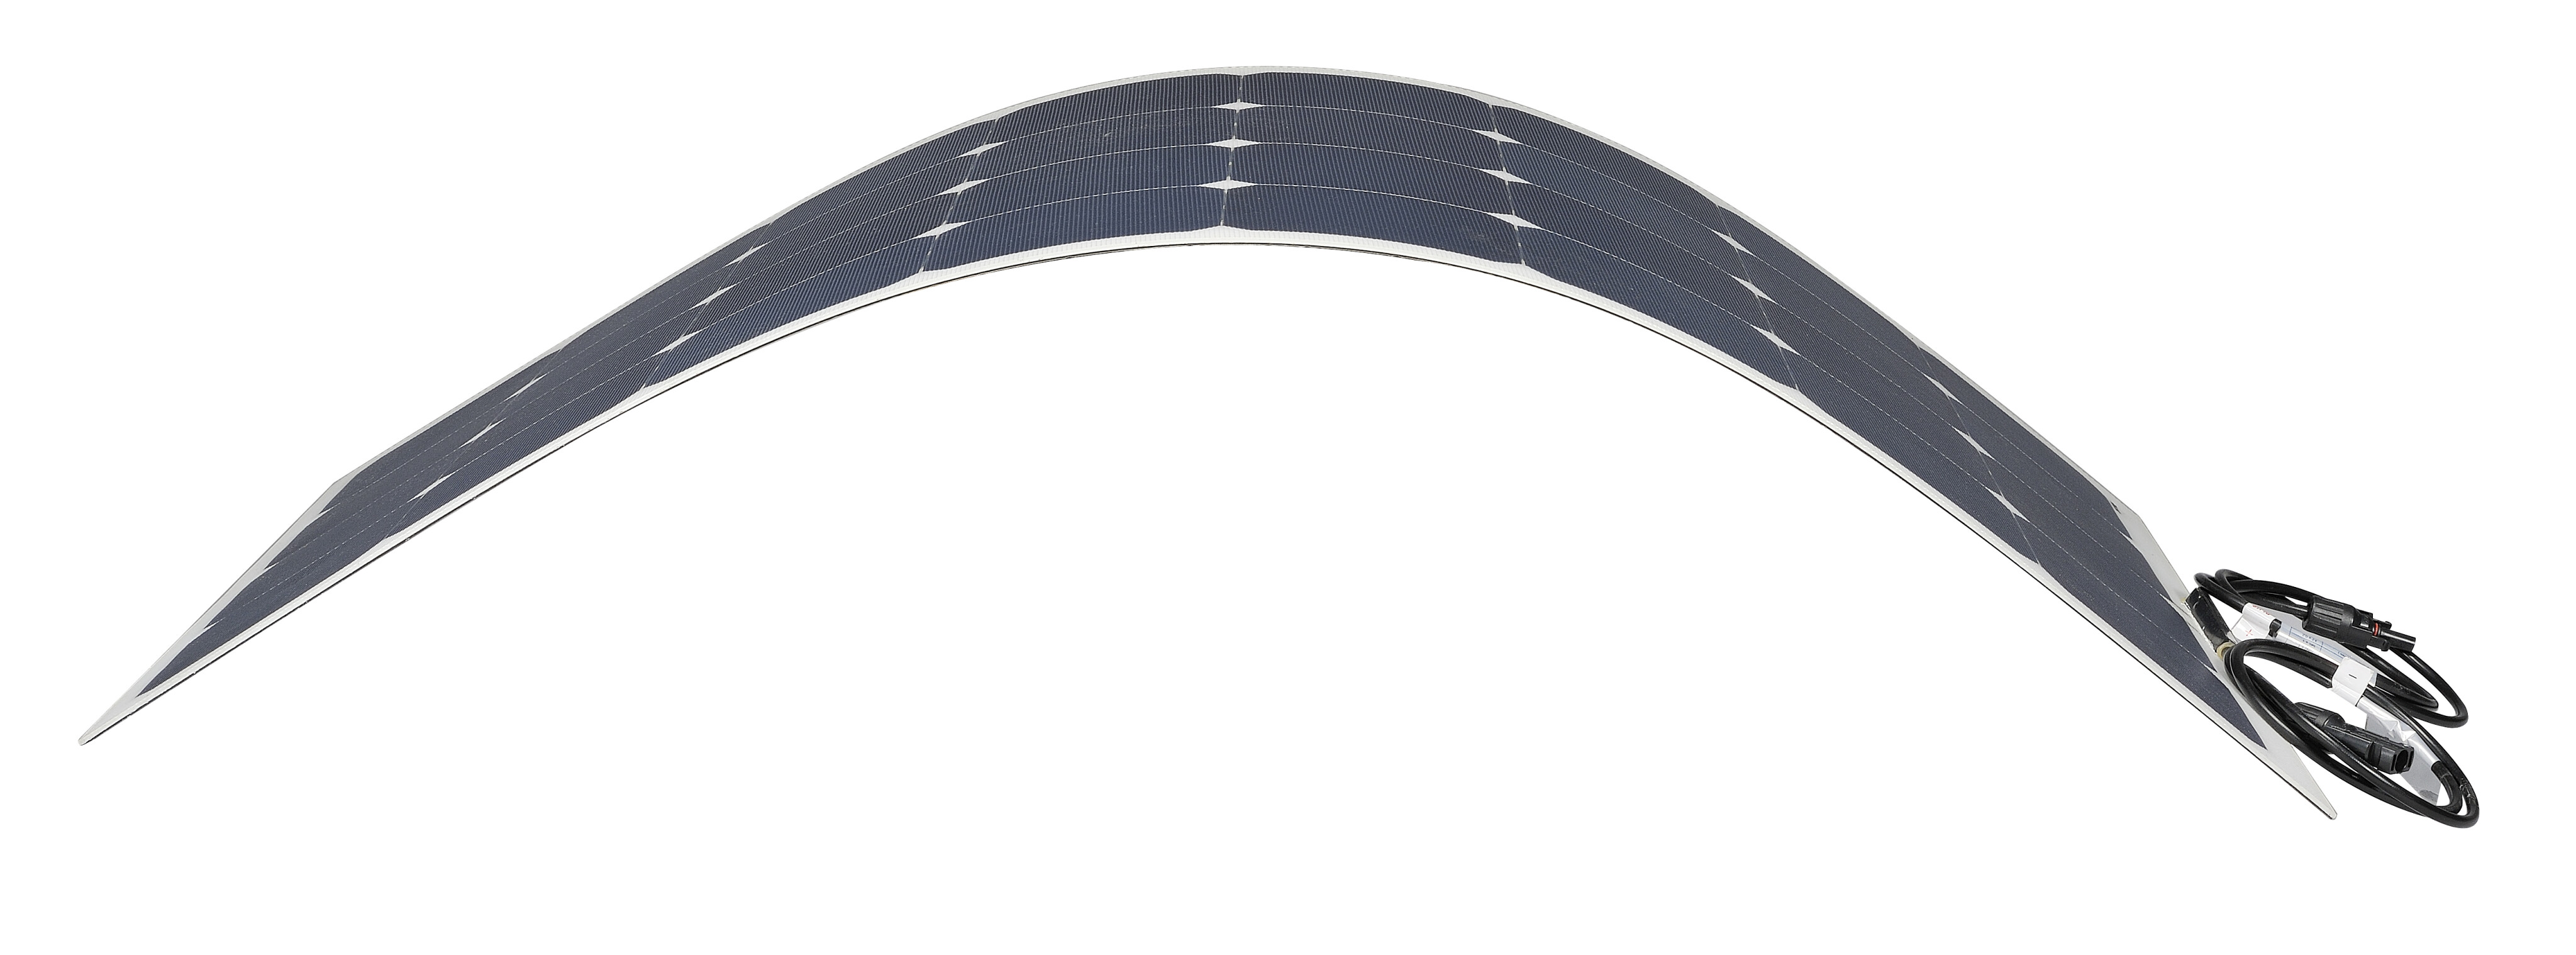 134f1683/projecta semi flexible solar panels 2 jpg